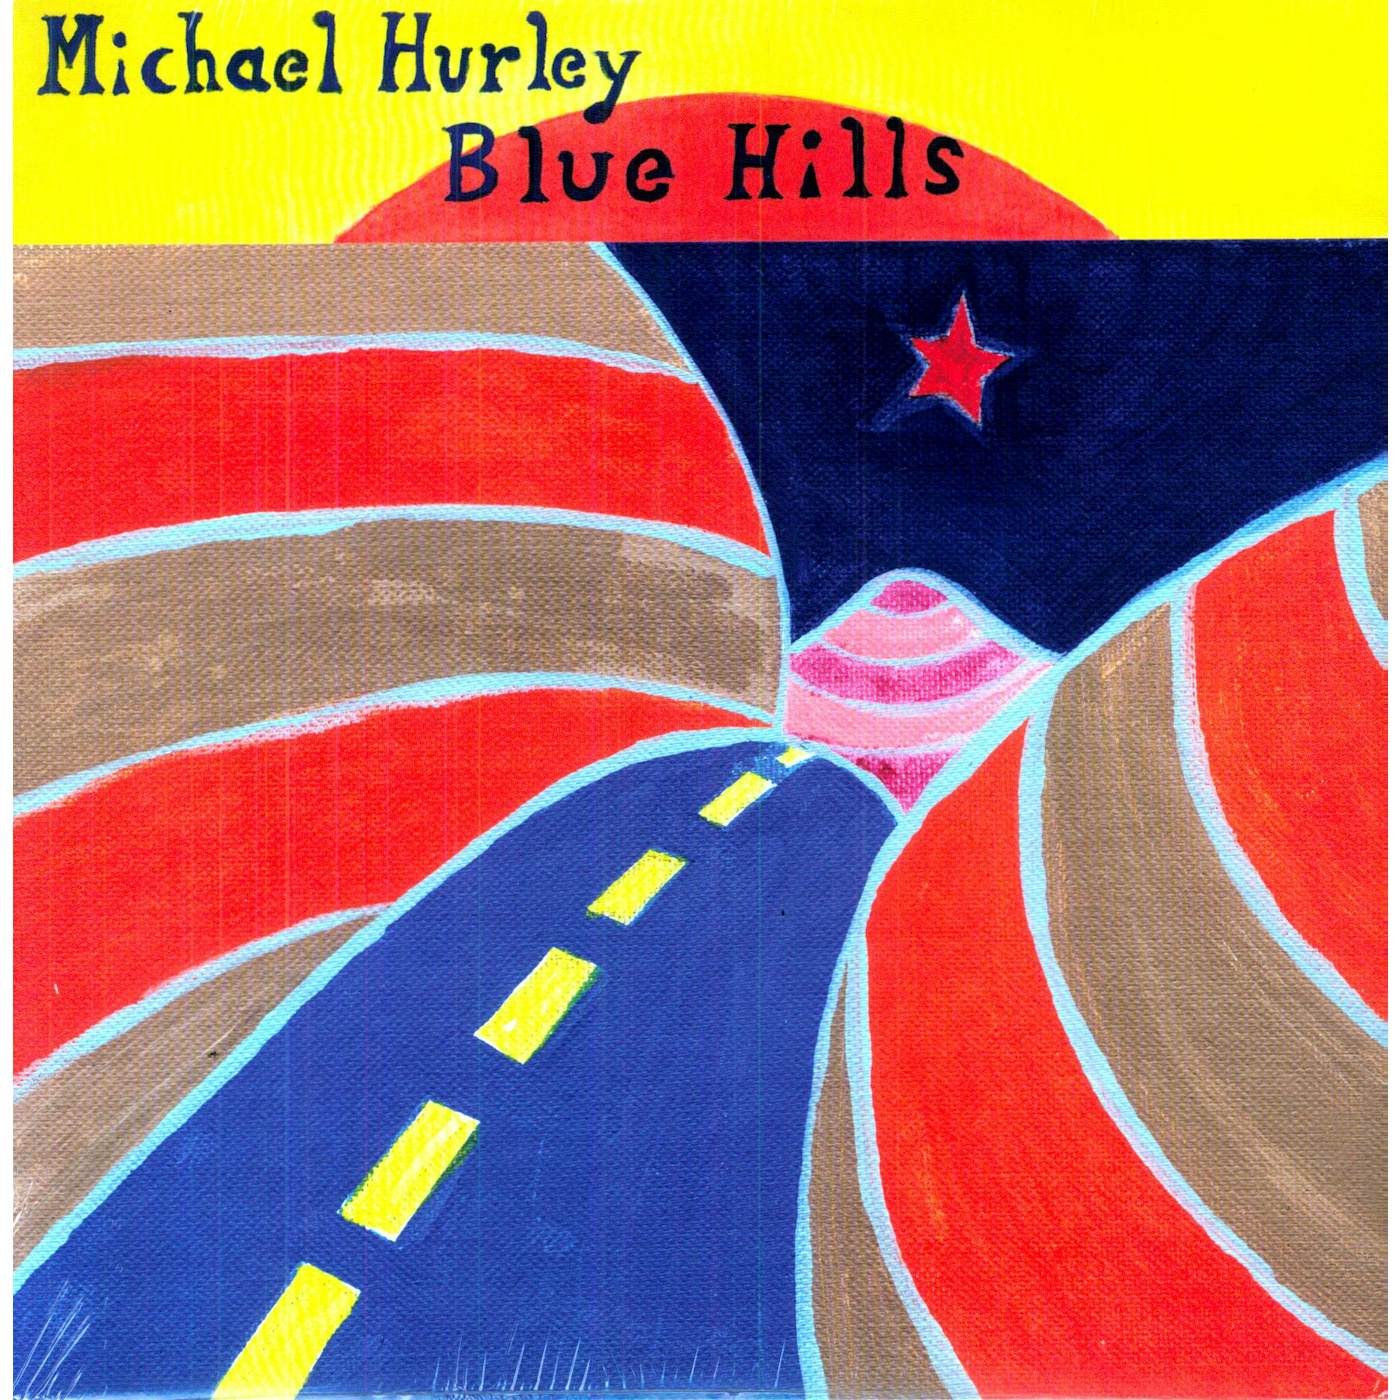 Michael Hurley BLUE HILLS Vinyl Record